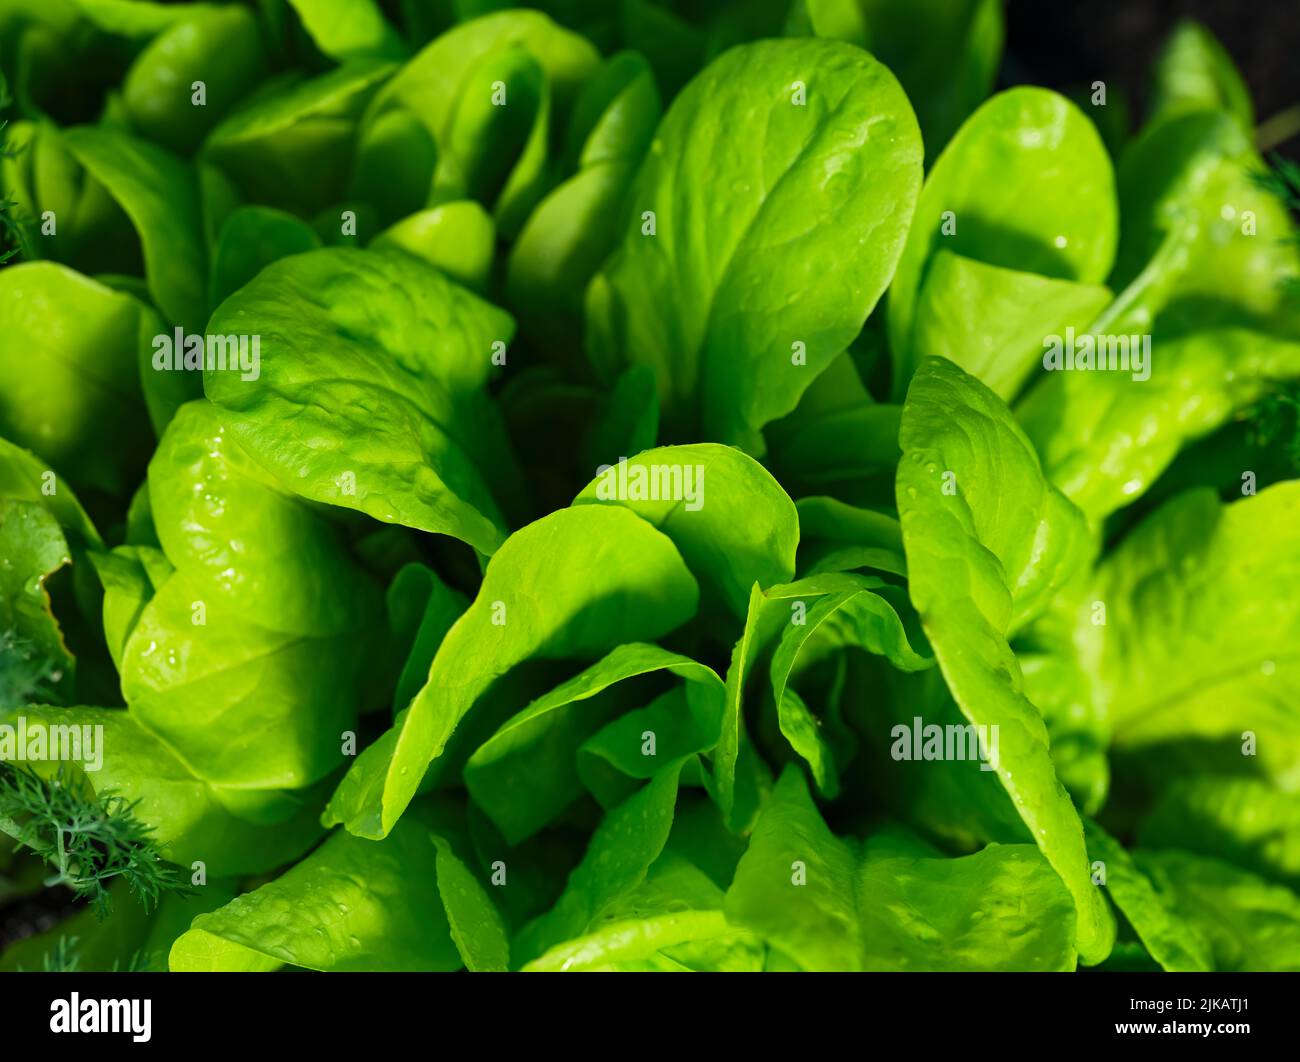 Garden lettuce plants growing in a vegetable garden. Close-up Stock Photo